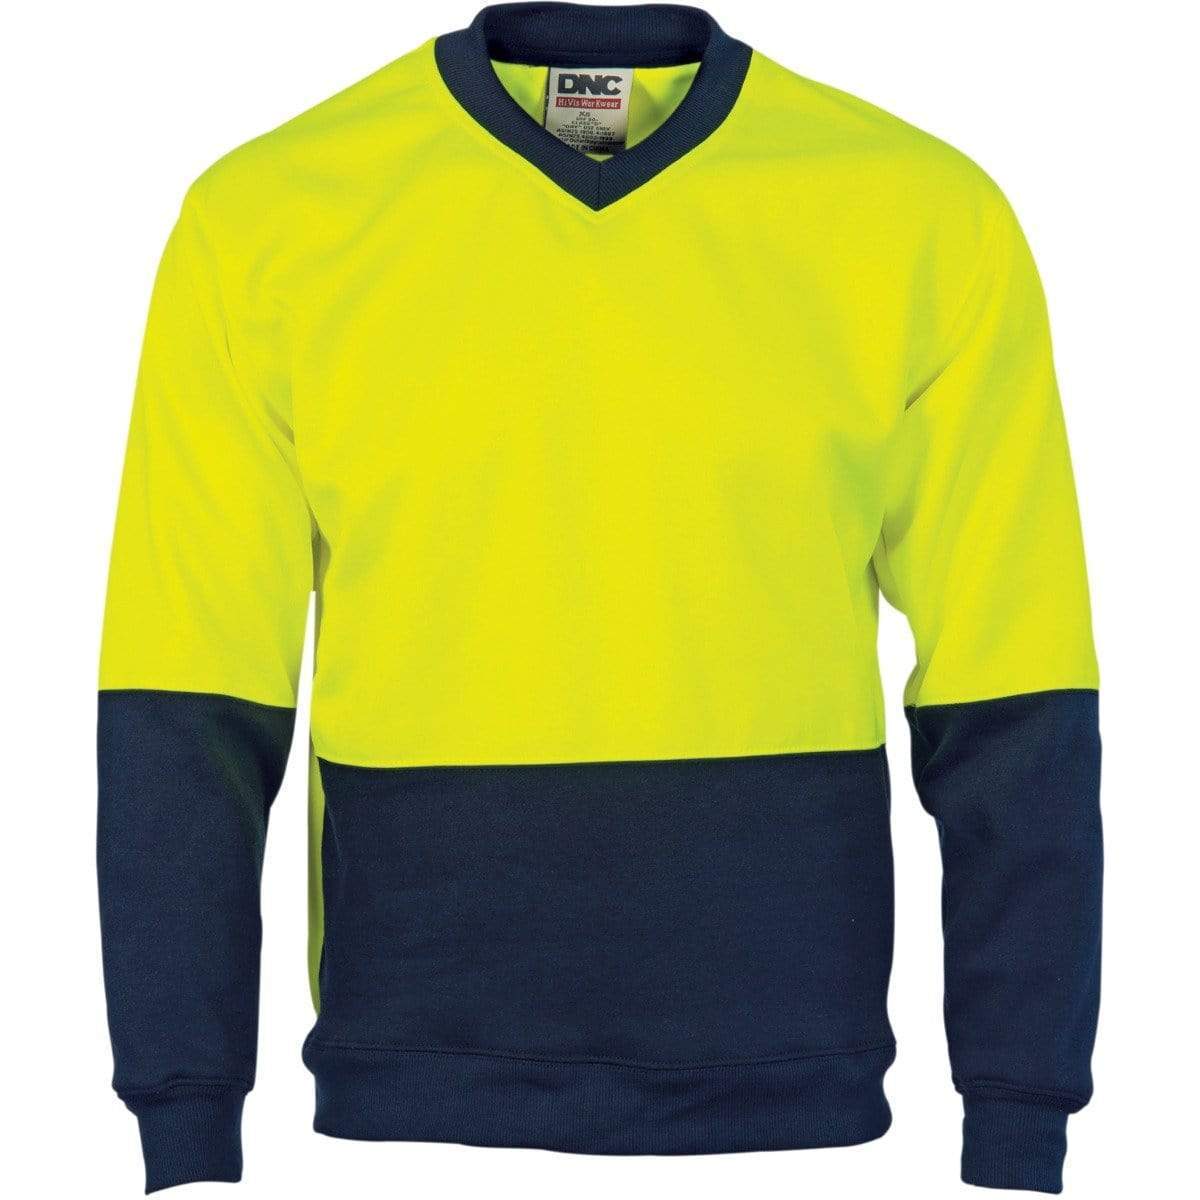 Dnc Workwear Hi-vis Two-tone Fleecy V-neck Sweatshirt (Sloppy Joe) - 3822 Work Wear DNC Workwear Yellow/Navy XS 